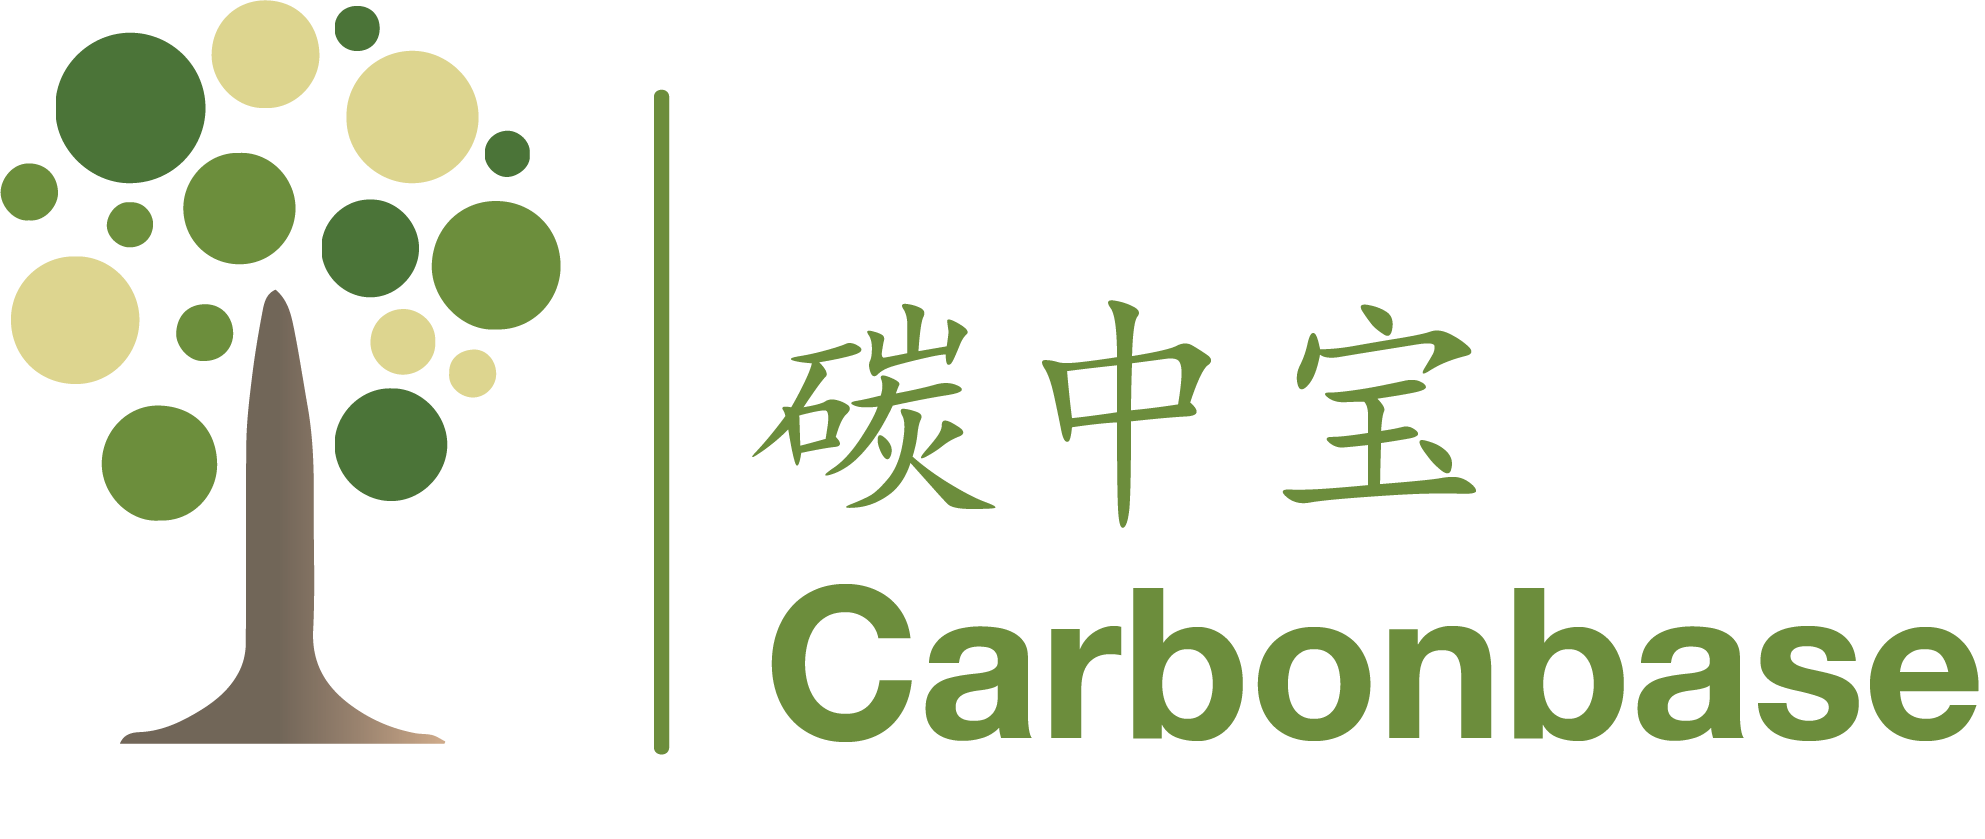 Carbonbase-Logo-中英